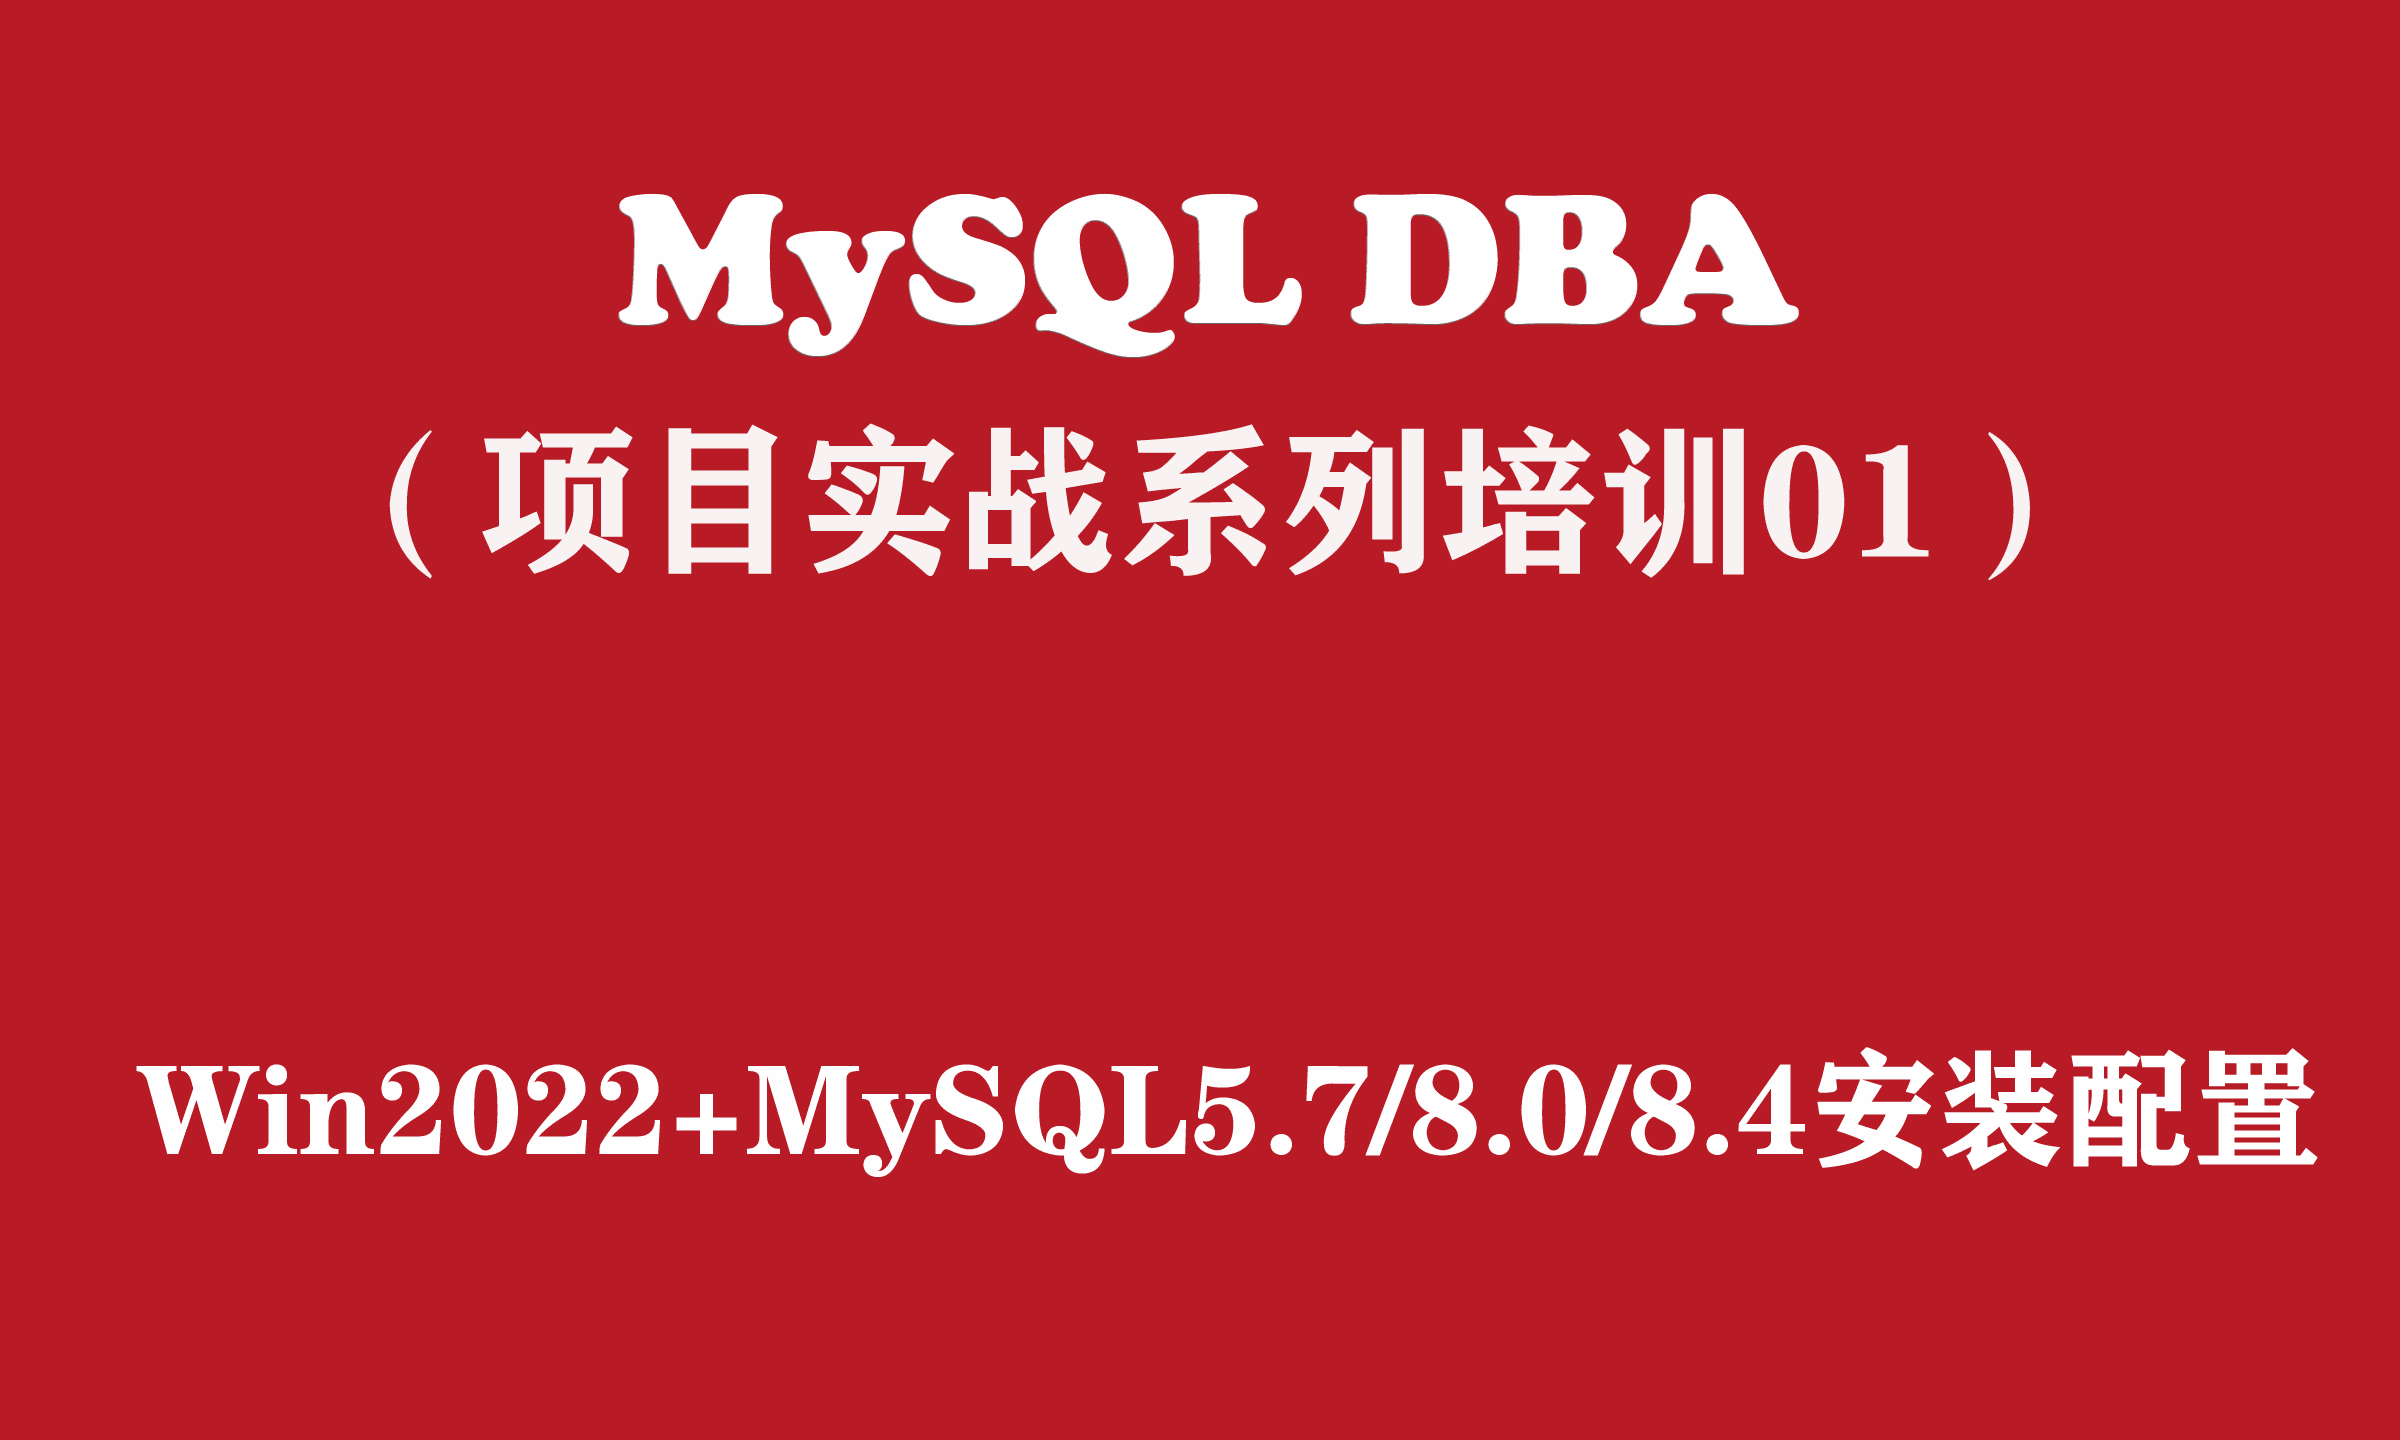 Win2022+MySQL5.7/8.0/8.4安装配置【MySQL DBA实战培训系列01】